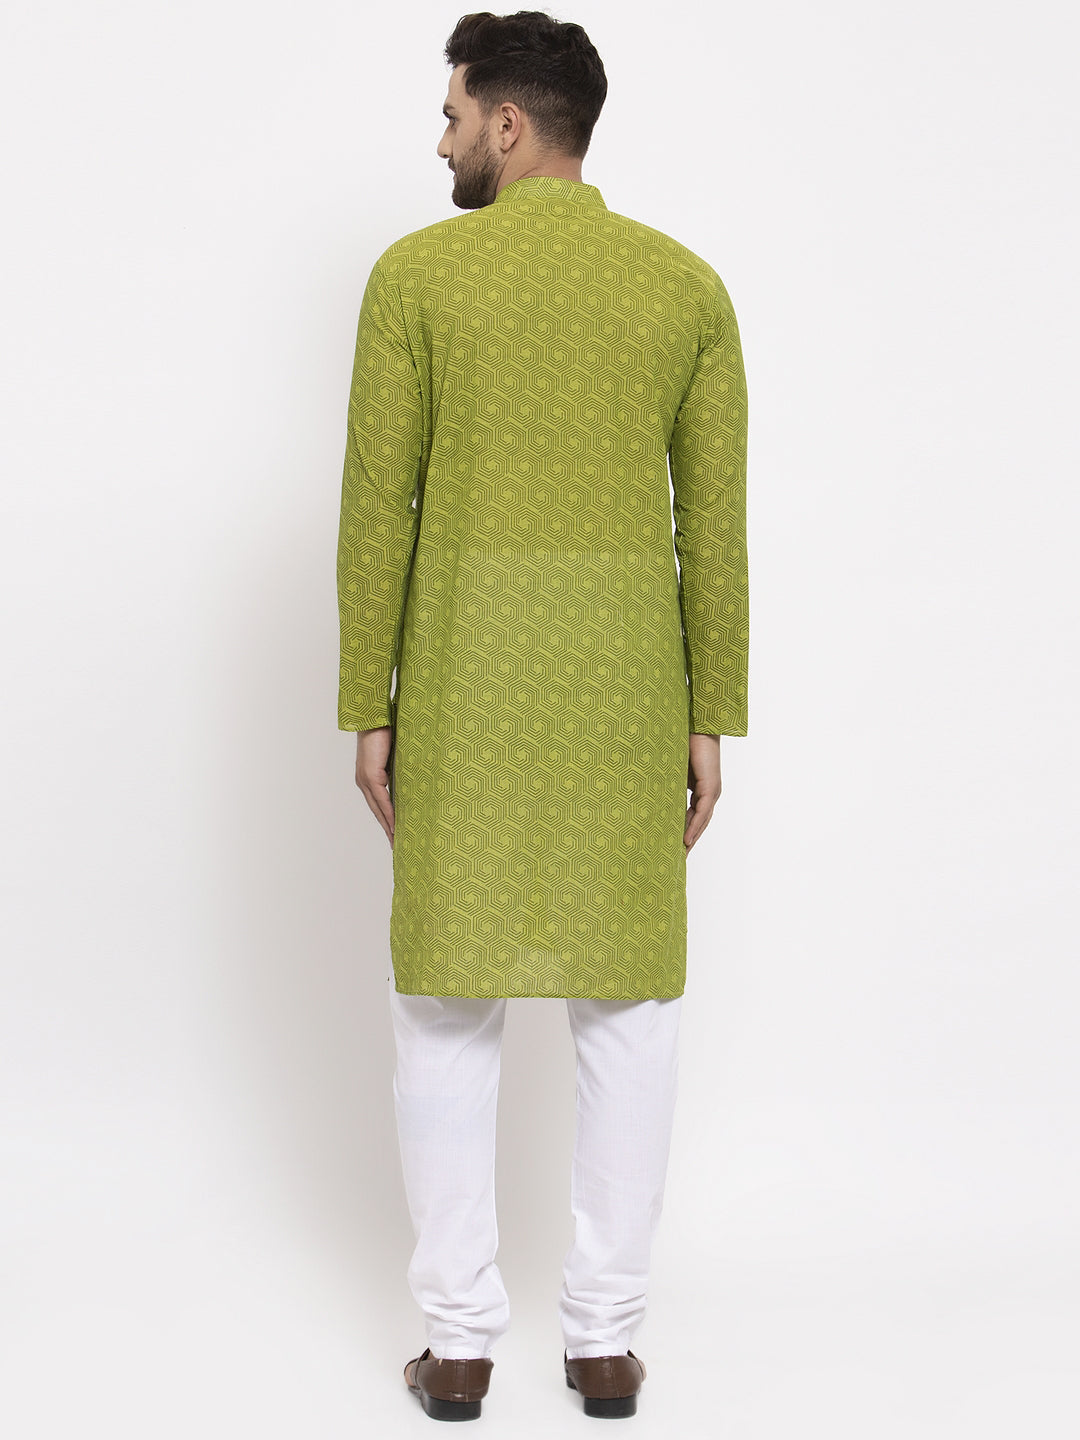 Jompers Men's Green Cotton Printed Kurta Payjama Set